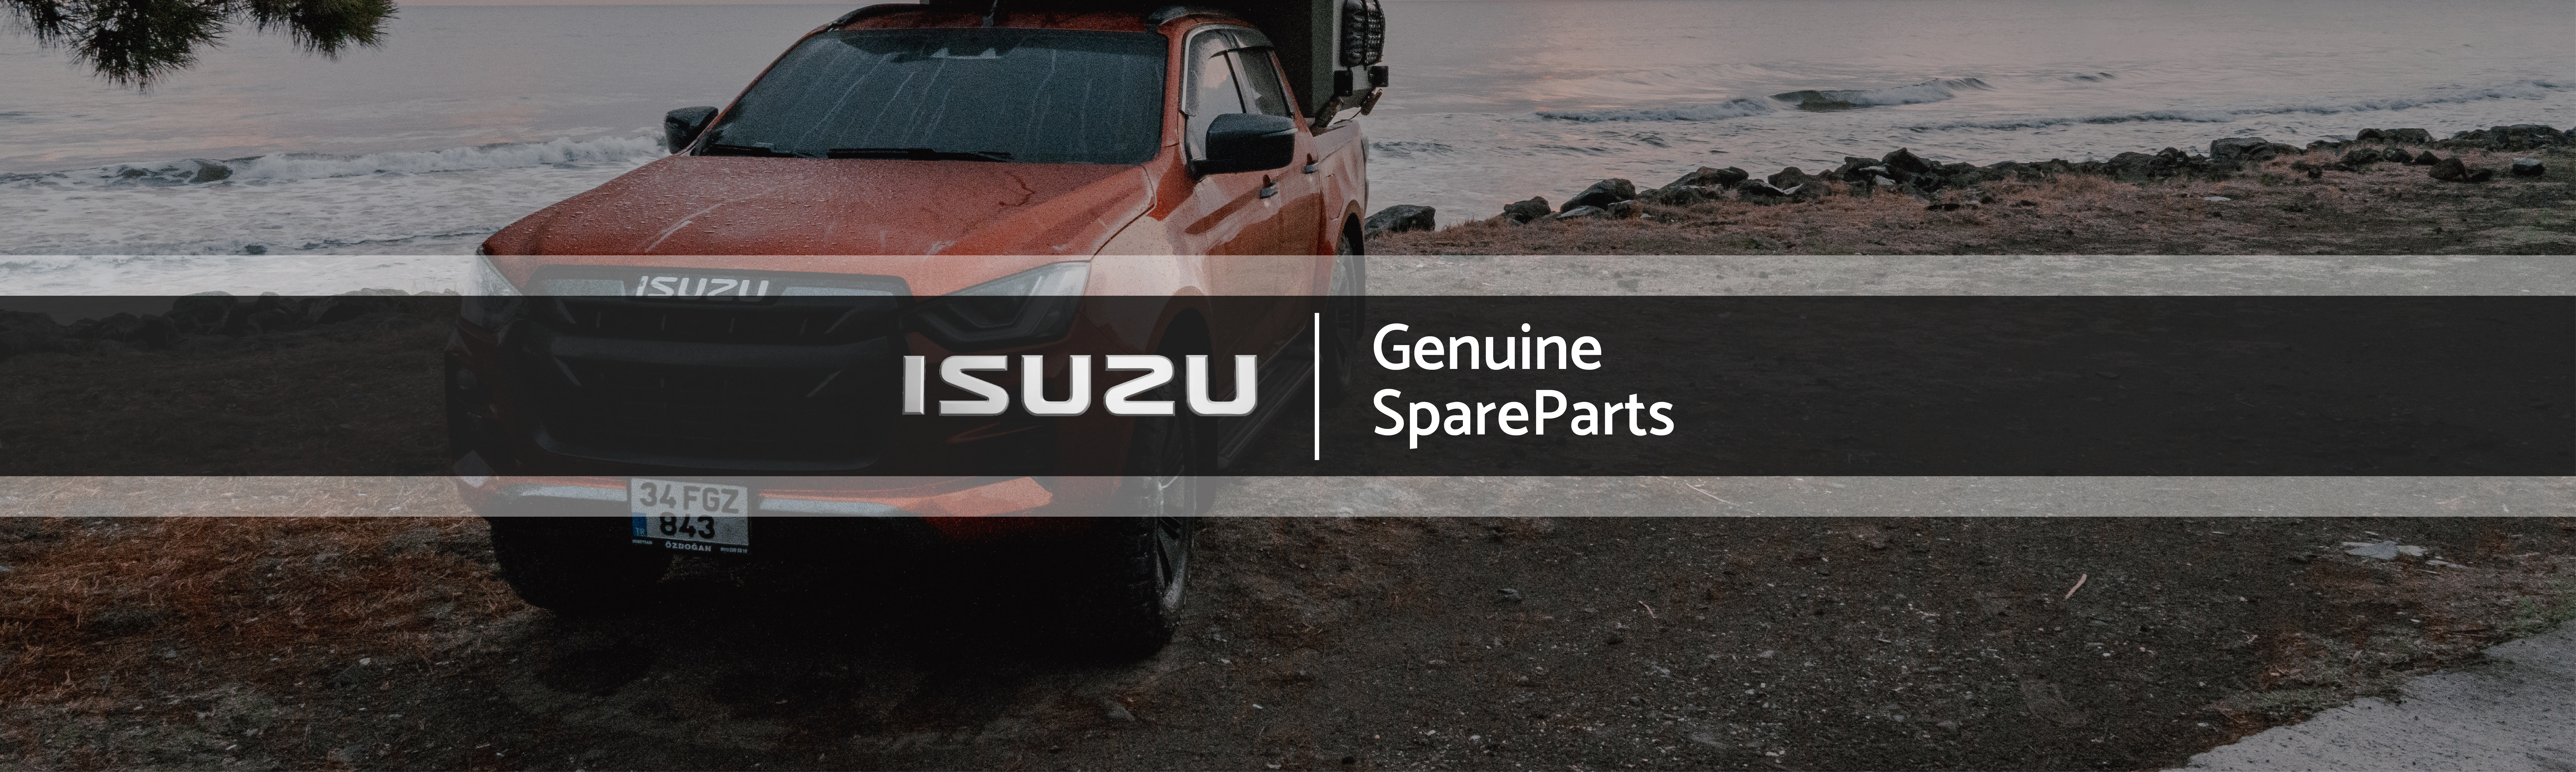 Genuine ‏‏ISUZU Spare Parts Supplier In Dubai - UAE